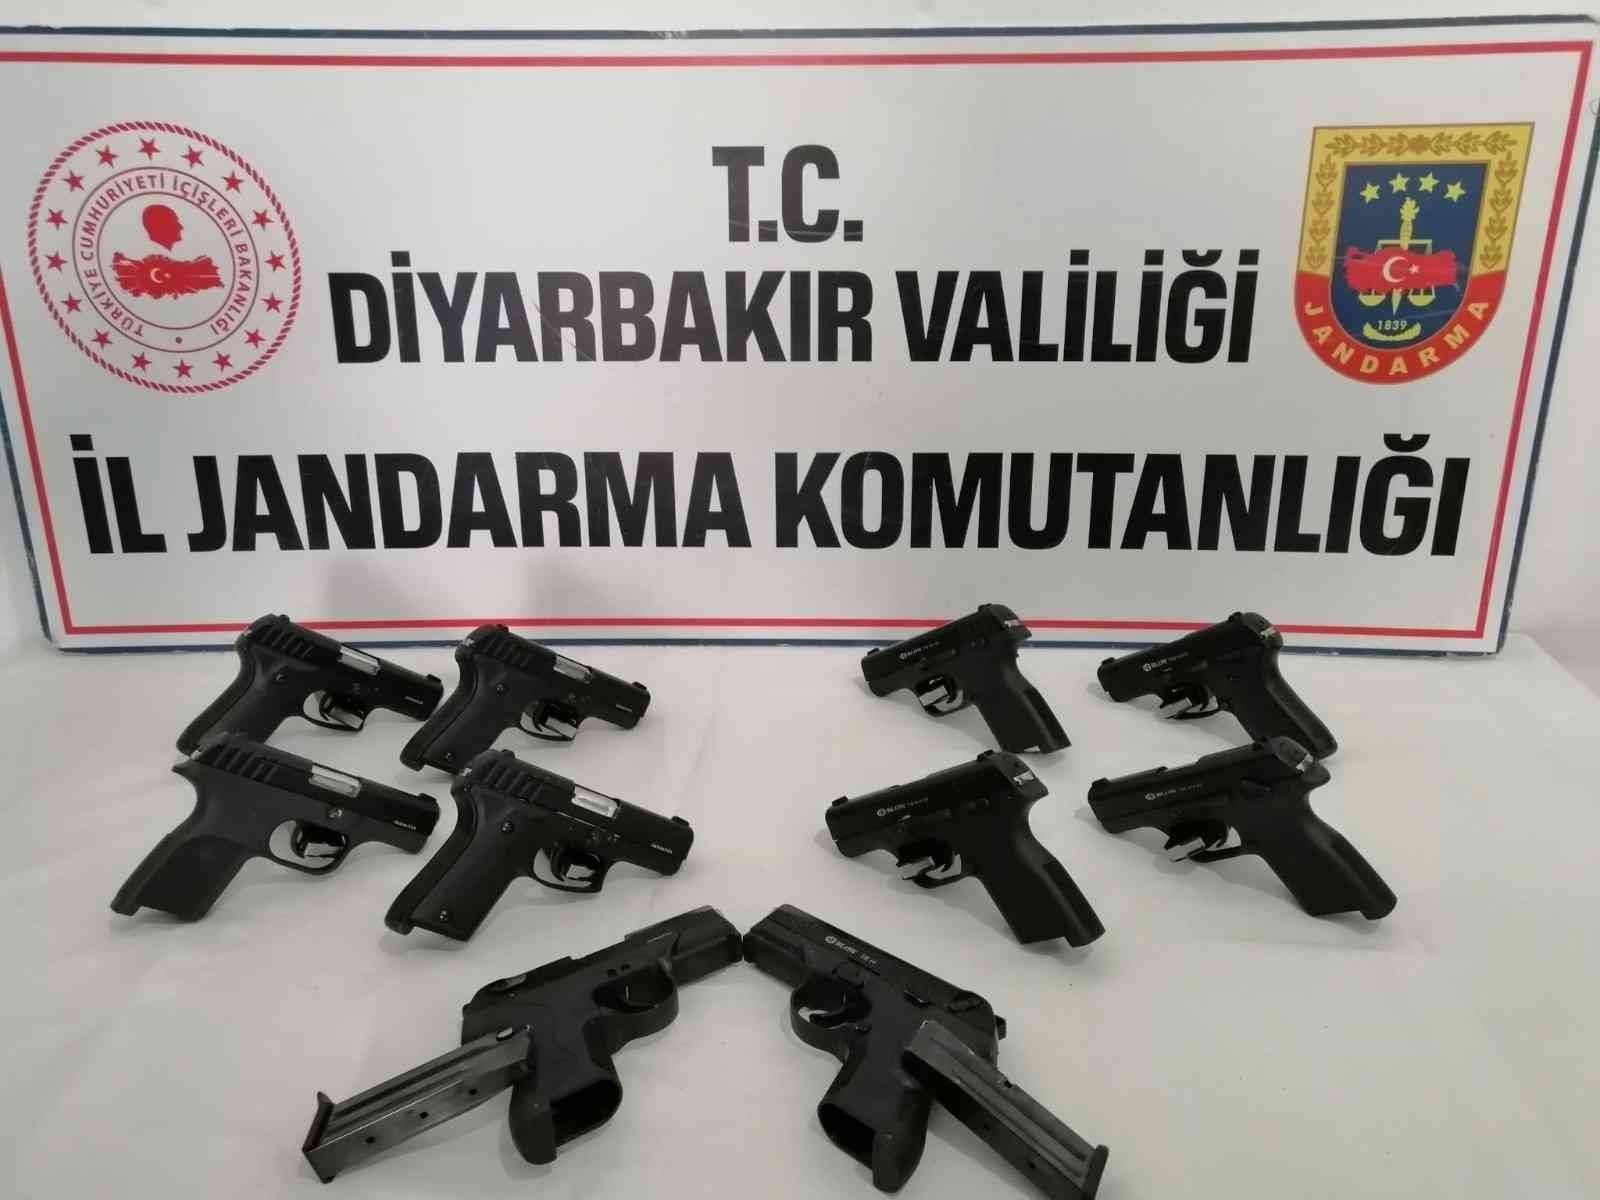 Diyarbakır’da 10 adet ruhsatsız tabanca ele geçirildi #diyarbakir